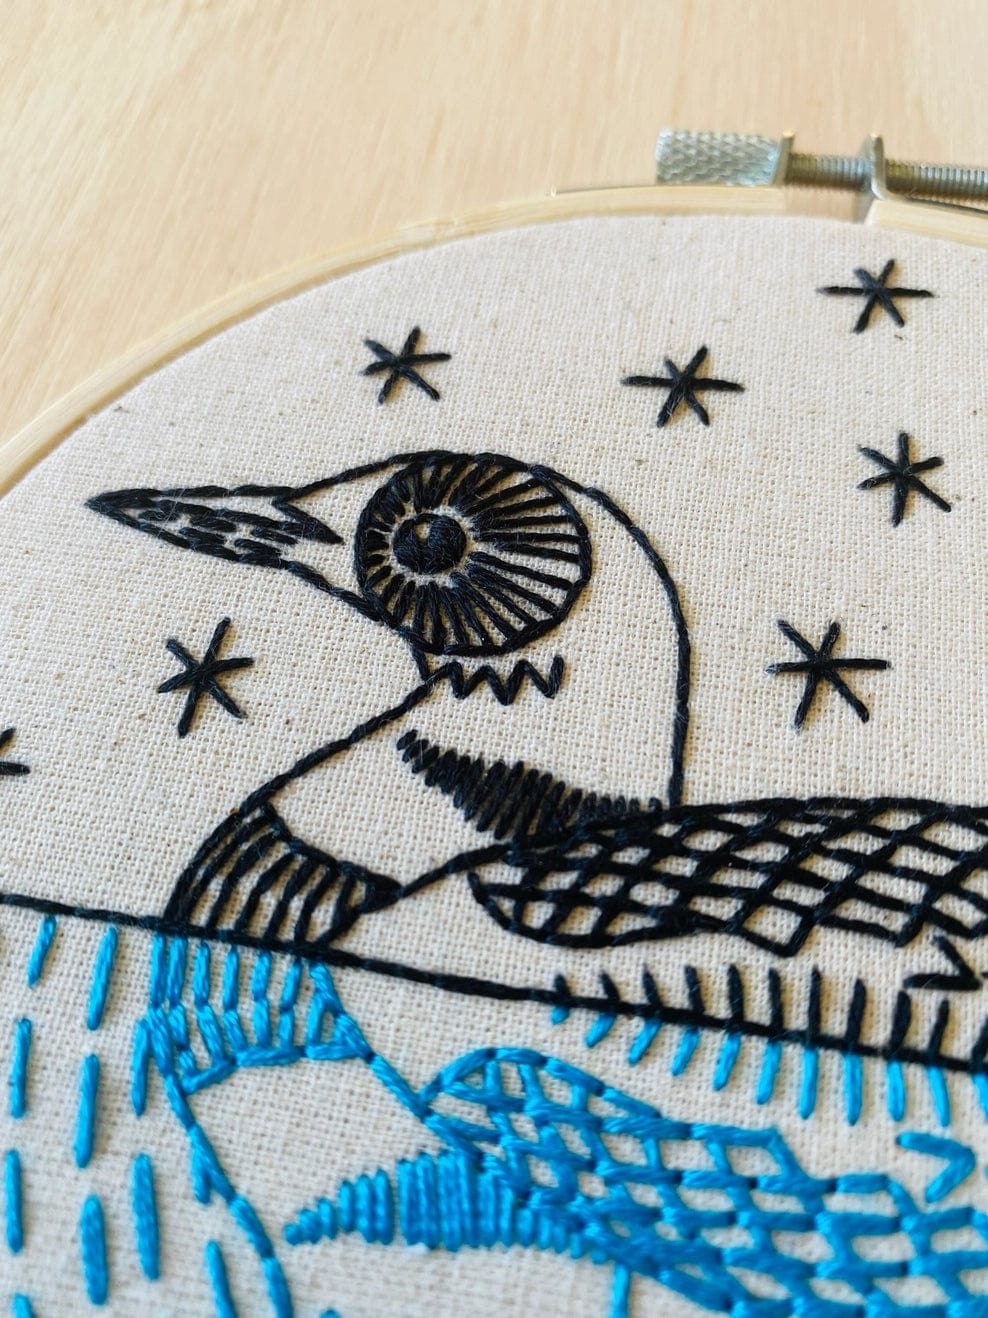 Default Loon - Hook, Line & Tinker Embroidery Kit